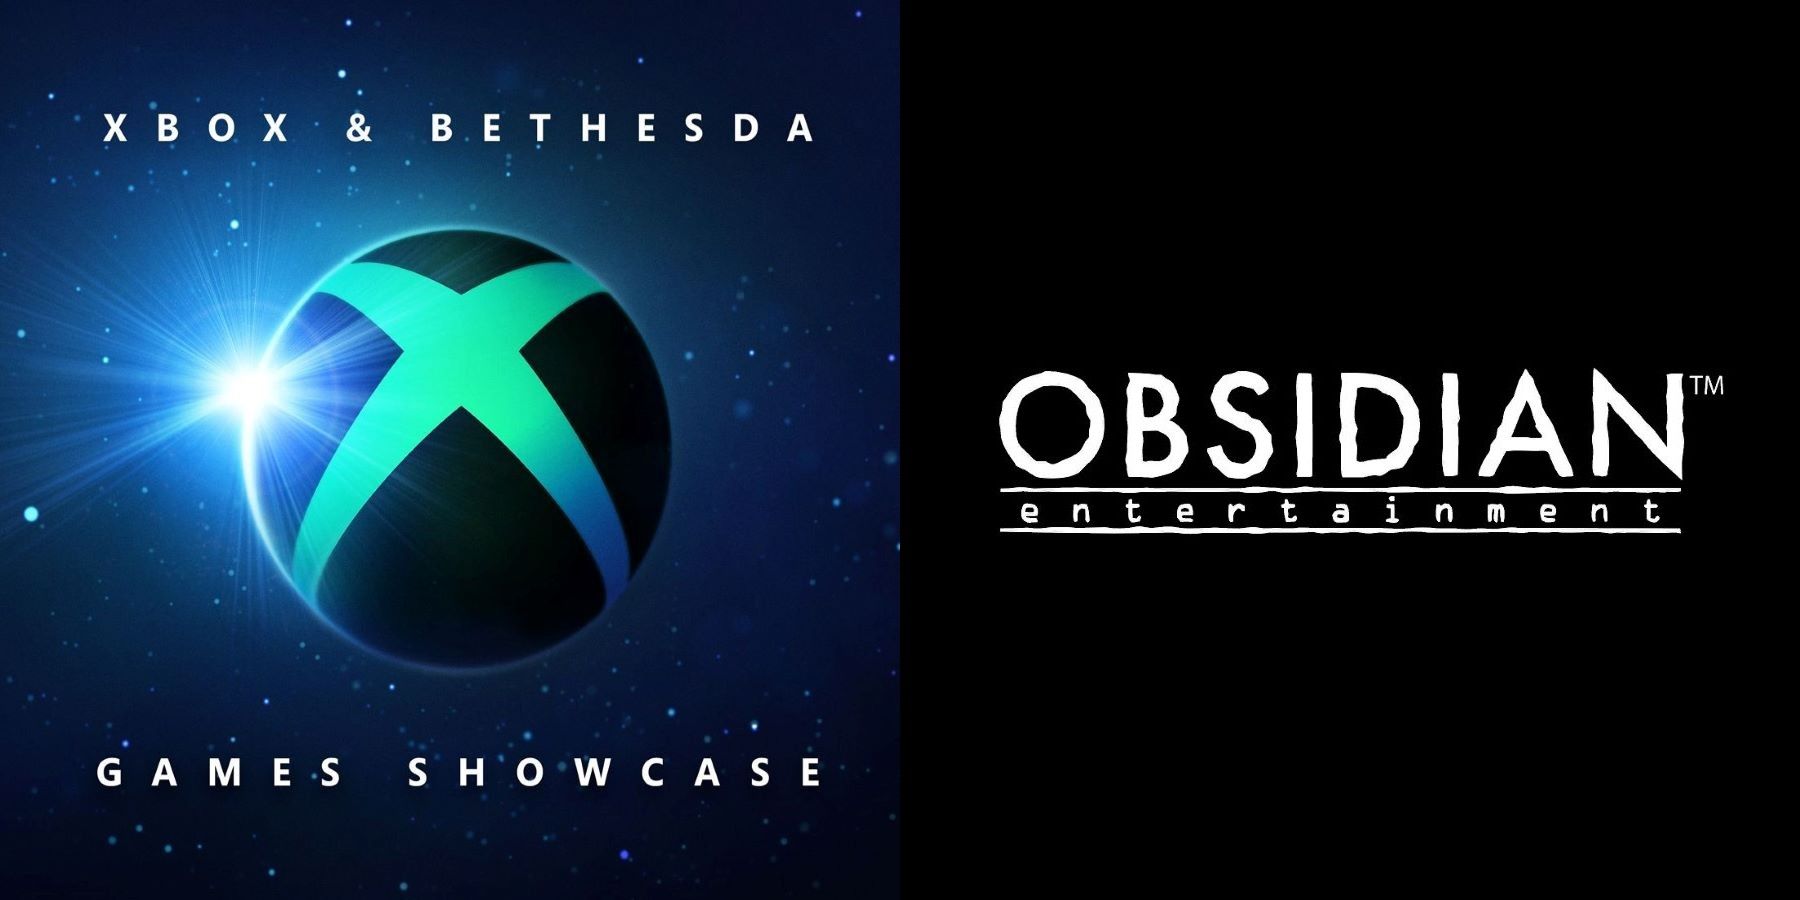 The Obsidian Entertainment logo with the Xbox Bethesda Games Showcase banner